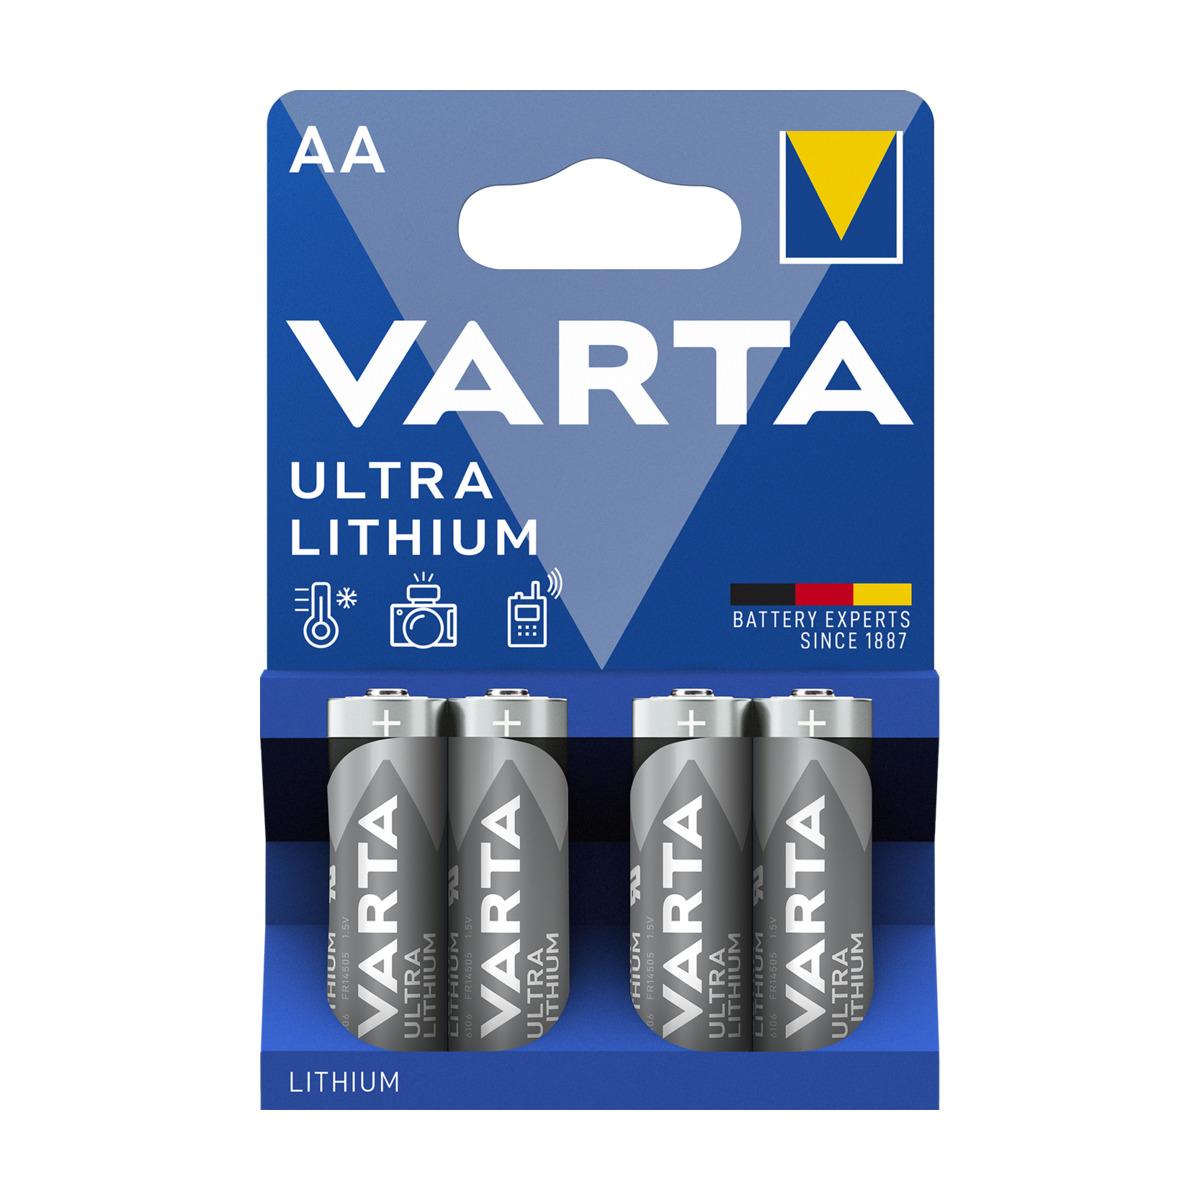 Varta Ultra Lithium AA 4 stk pakning